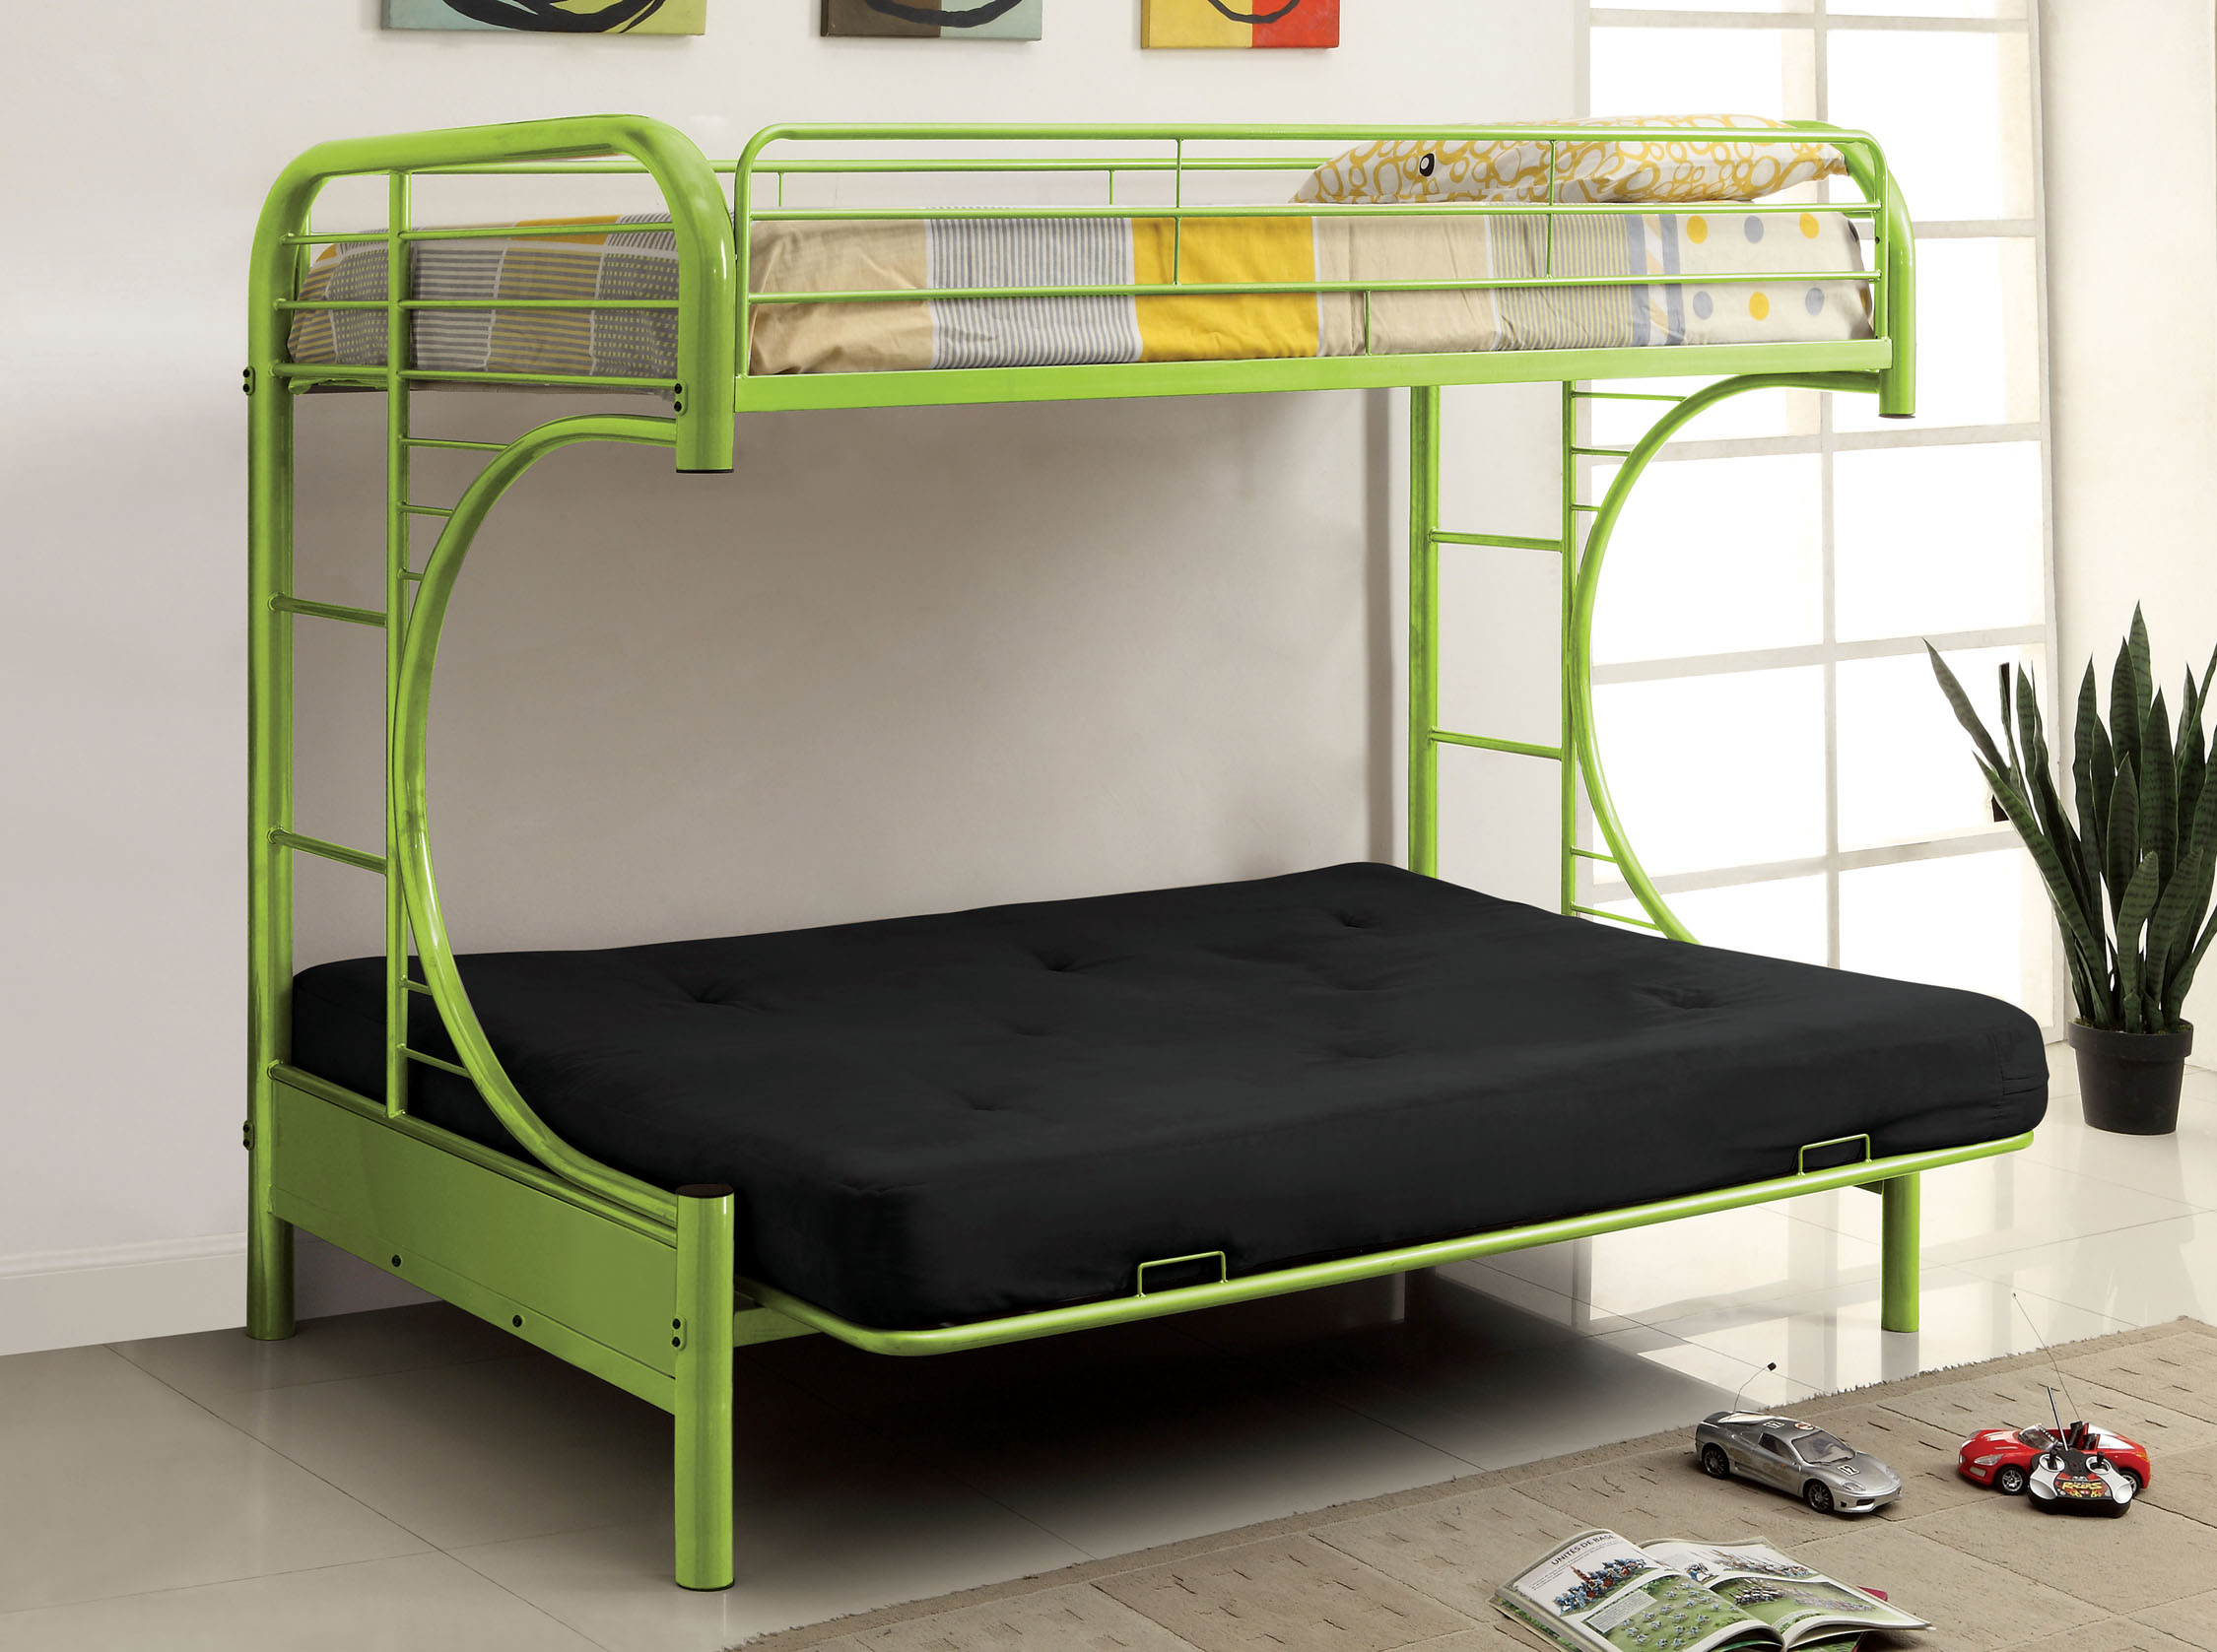 Furniture of America Spectrum Twin over Futon Metal Bunk Bed